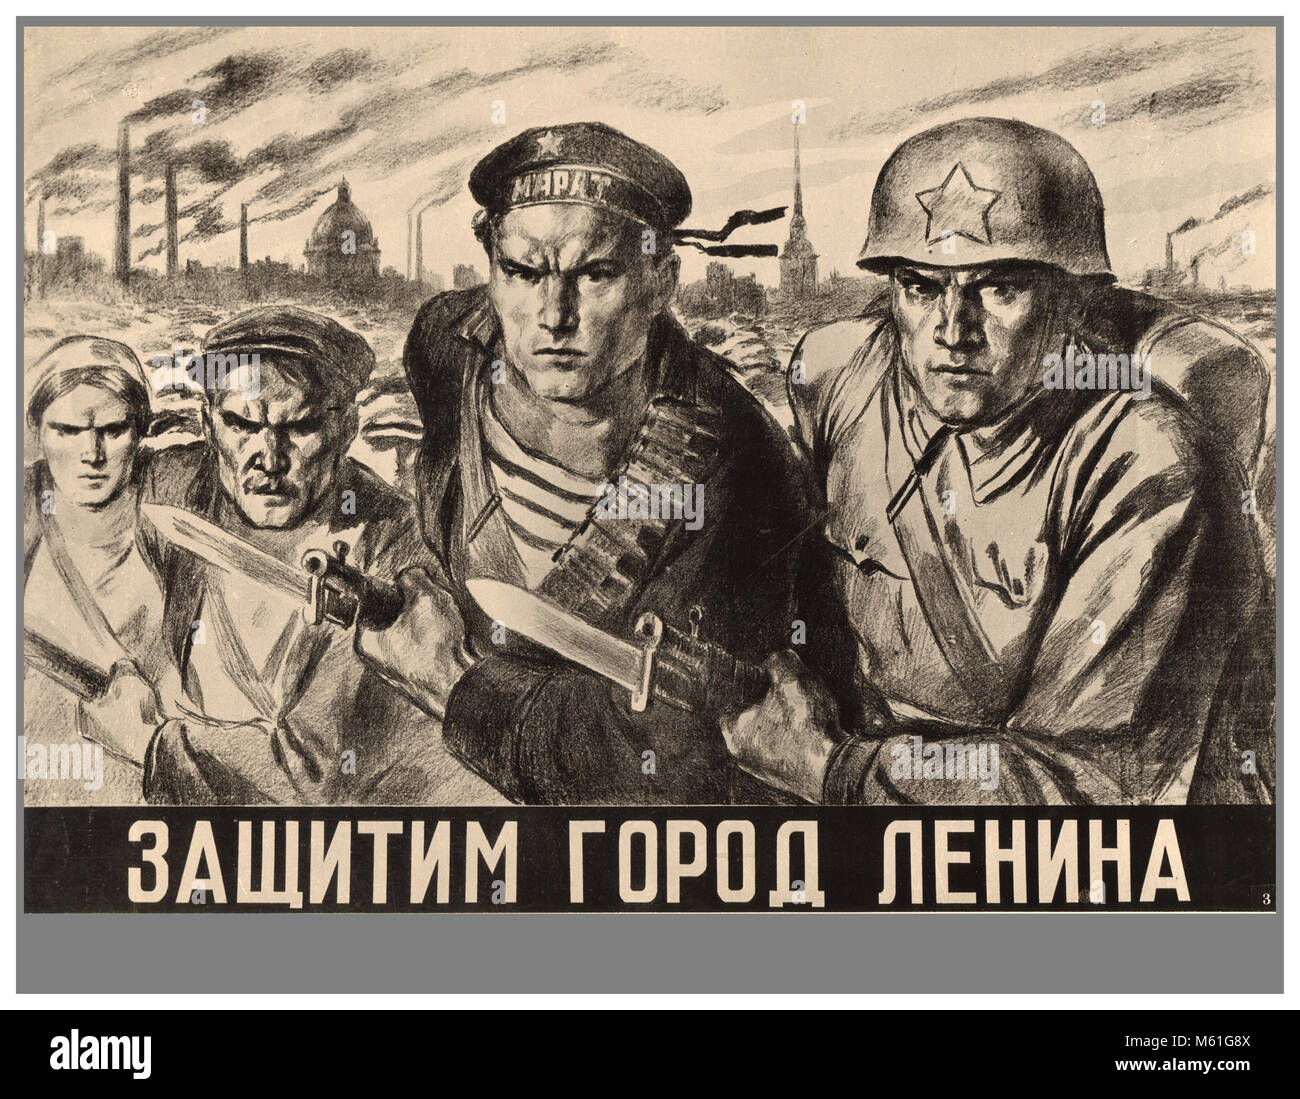 Vintage WW2 Soviet Propaganda Poster “We will defend the city of Lenin” (Leningrad) Illustrating the Soviet Military alongside determined civilians readying for a grim battle against Nazi Germany 1940’s Stock Photo